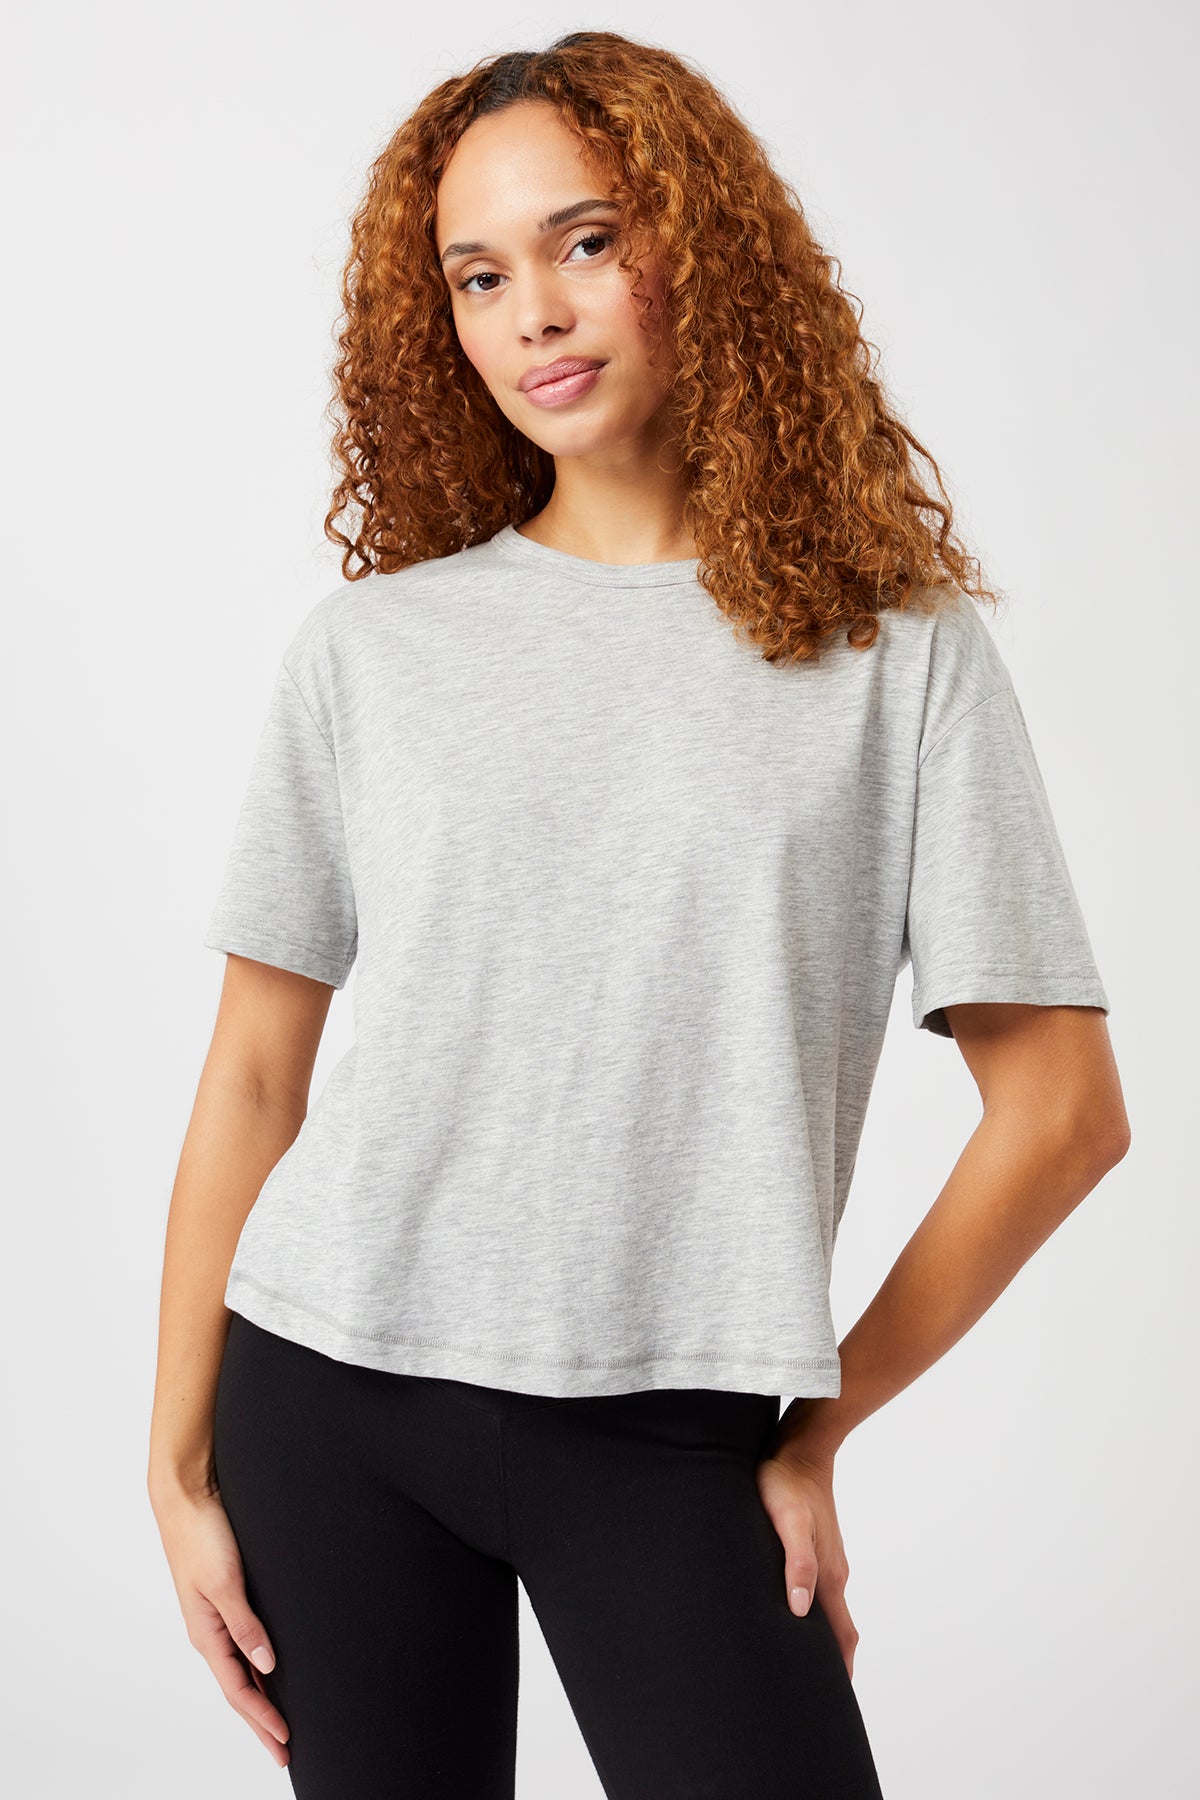 Mandala Yoga Shirt Grau Front - Boxy T-Shirt